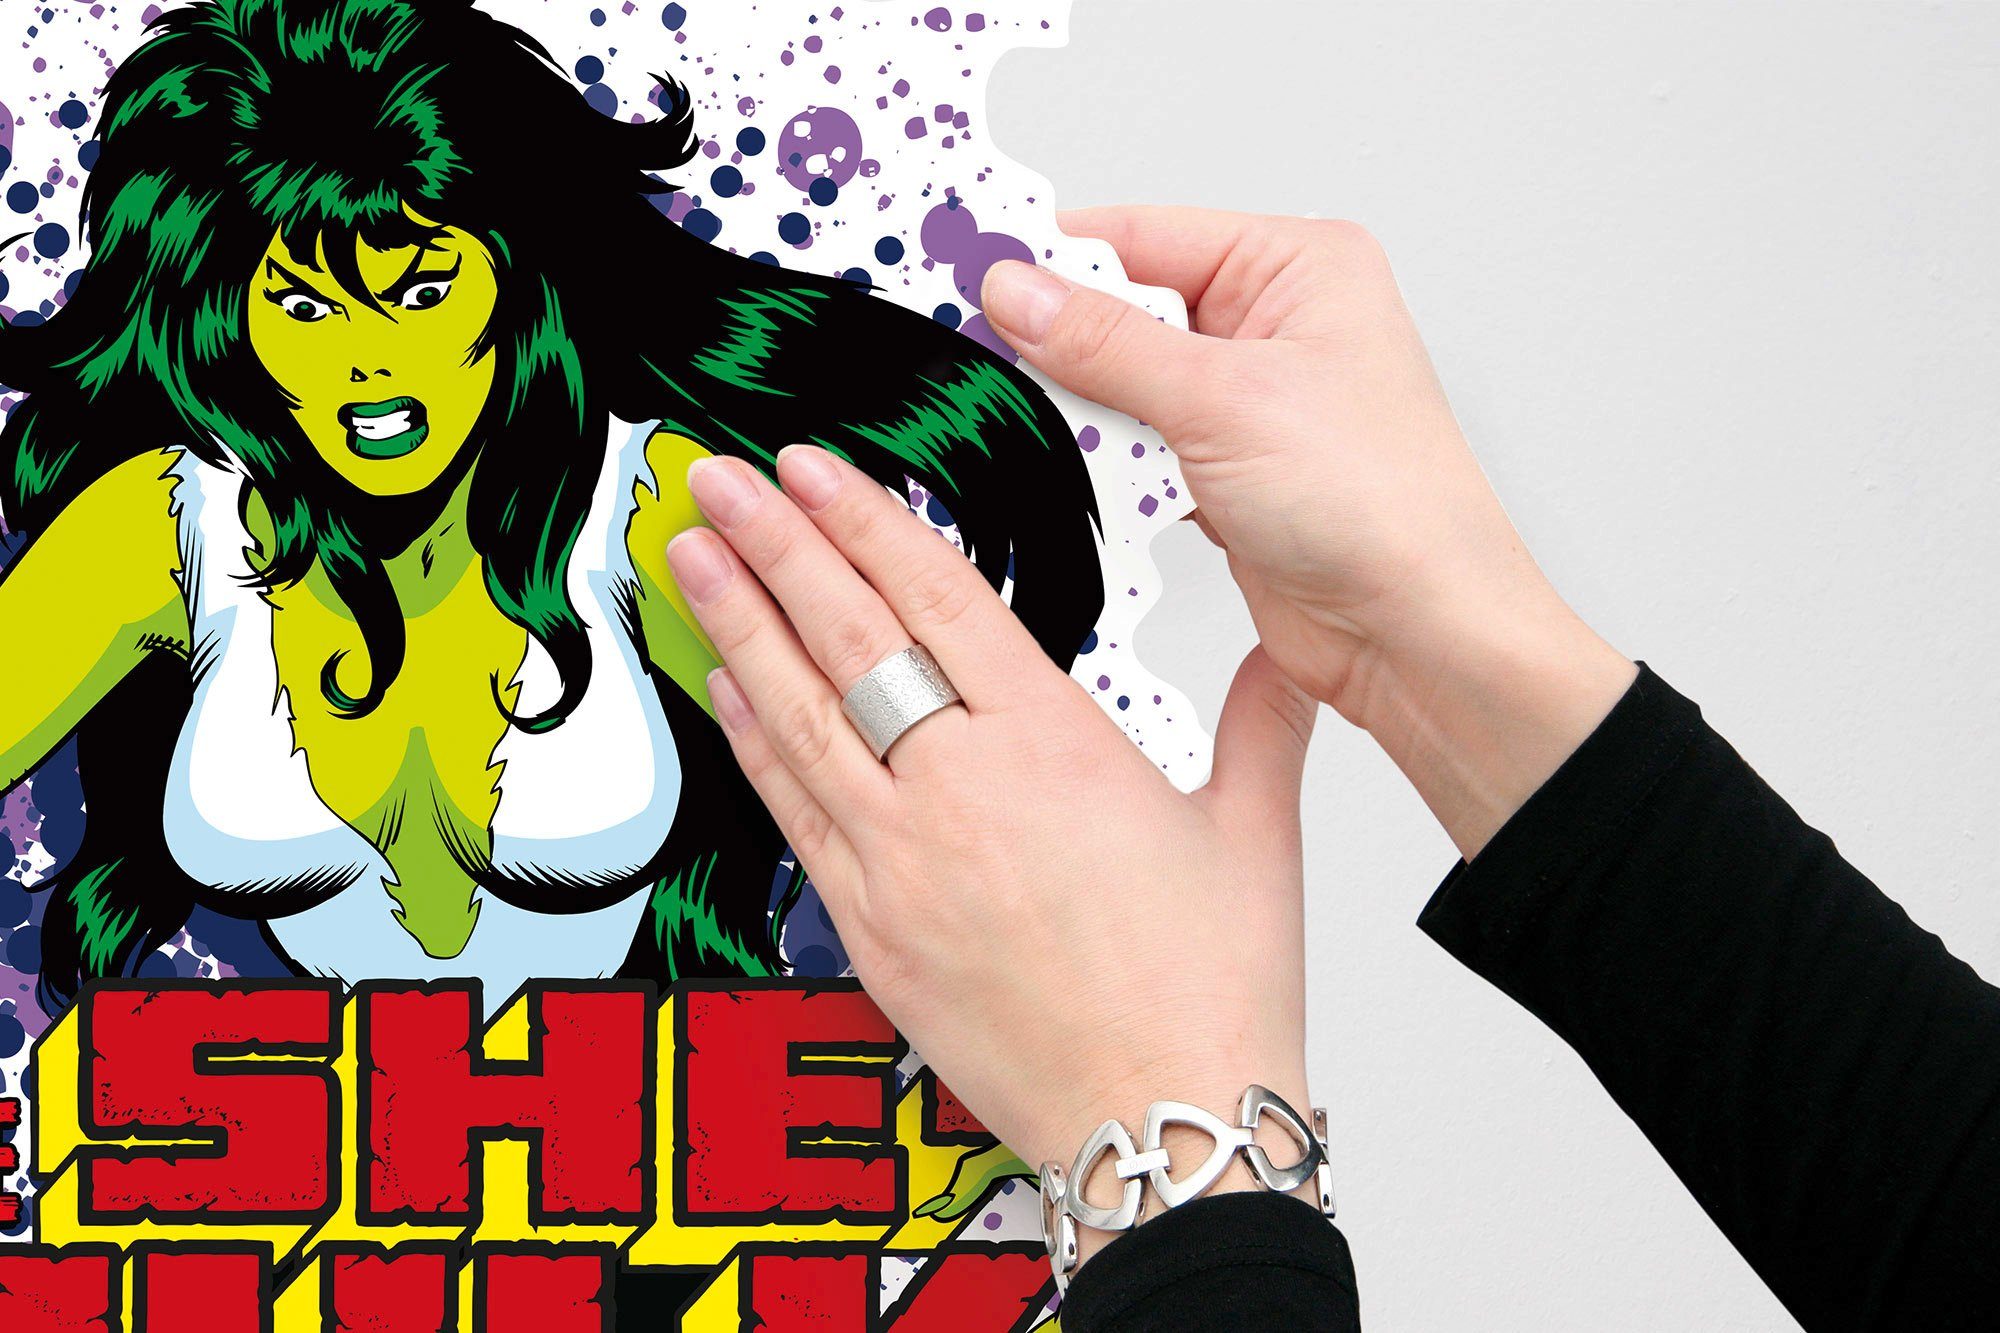 She-Hulk Wandtattoo (Breite Wandtattoo selbstklebendes Komar Comic St), Classic 50x70 Höhe), (1 cm x